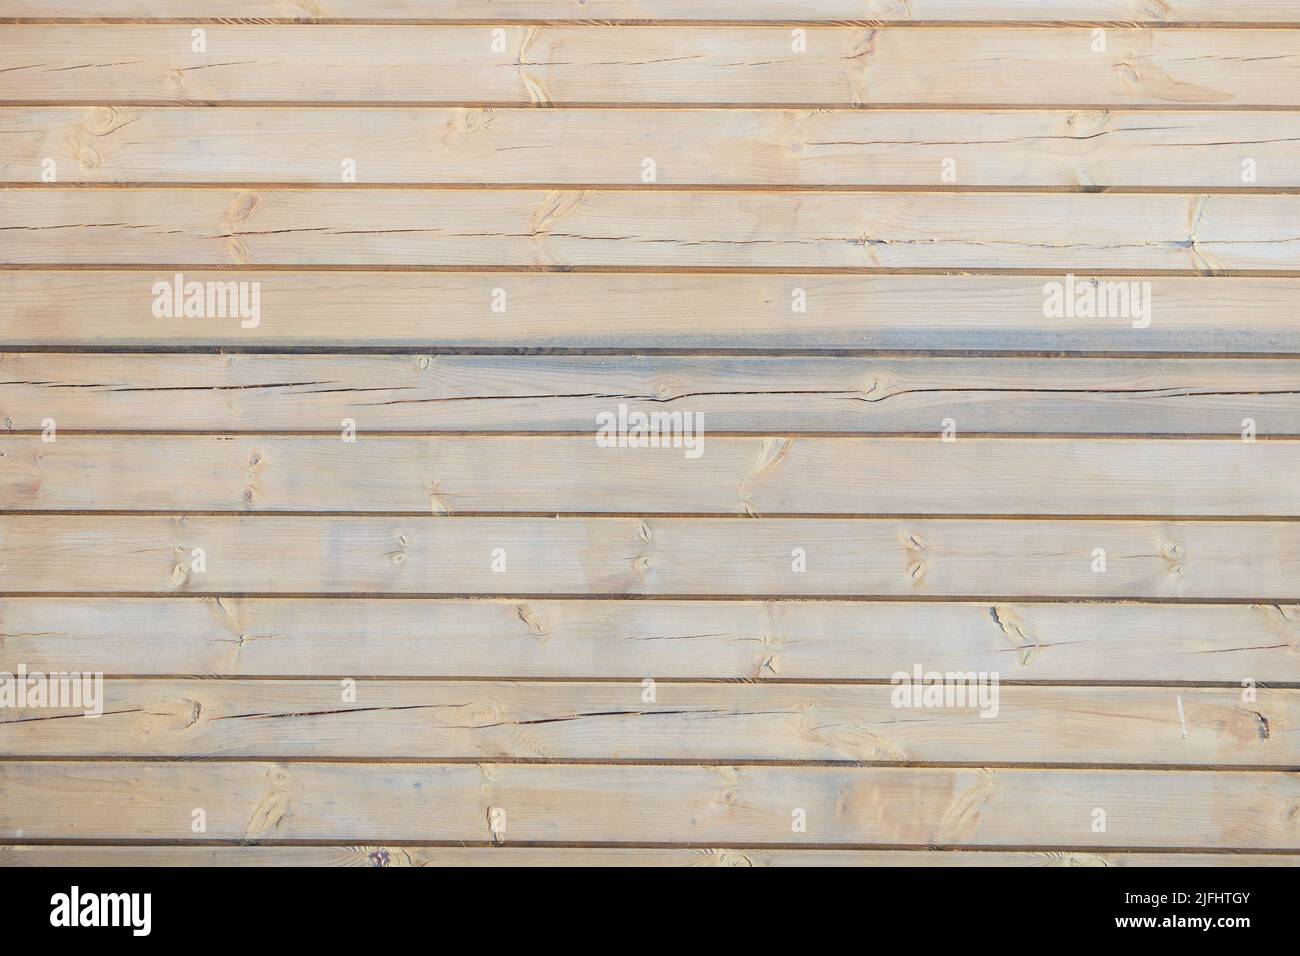 Textura de madera de revestimiento de pared paneles conectados en ranuras para fondos. Foto de stock